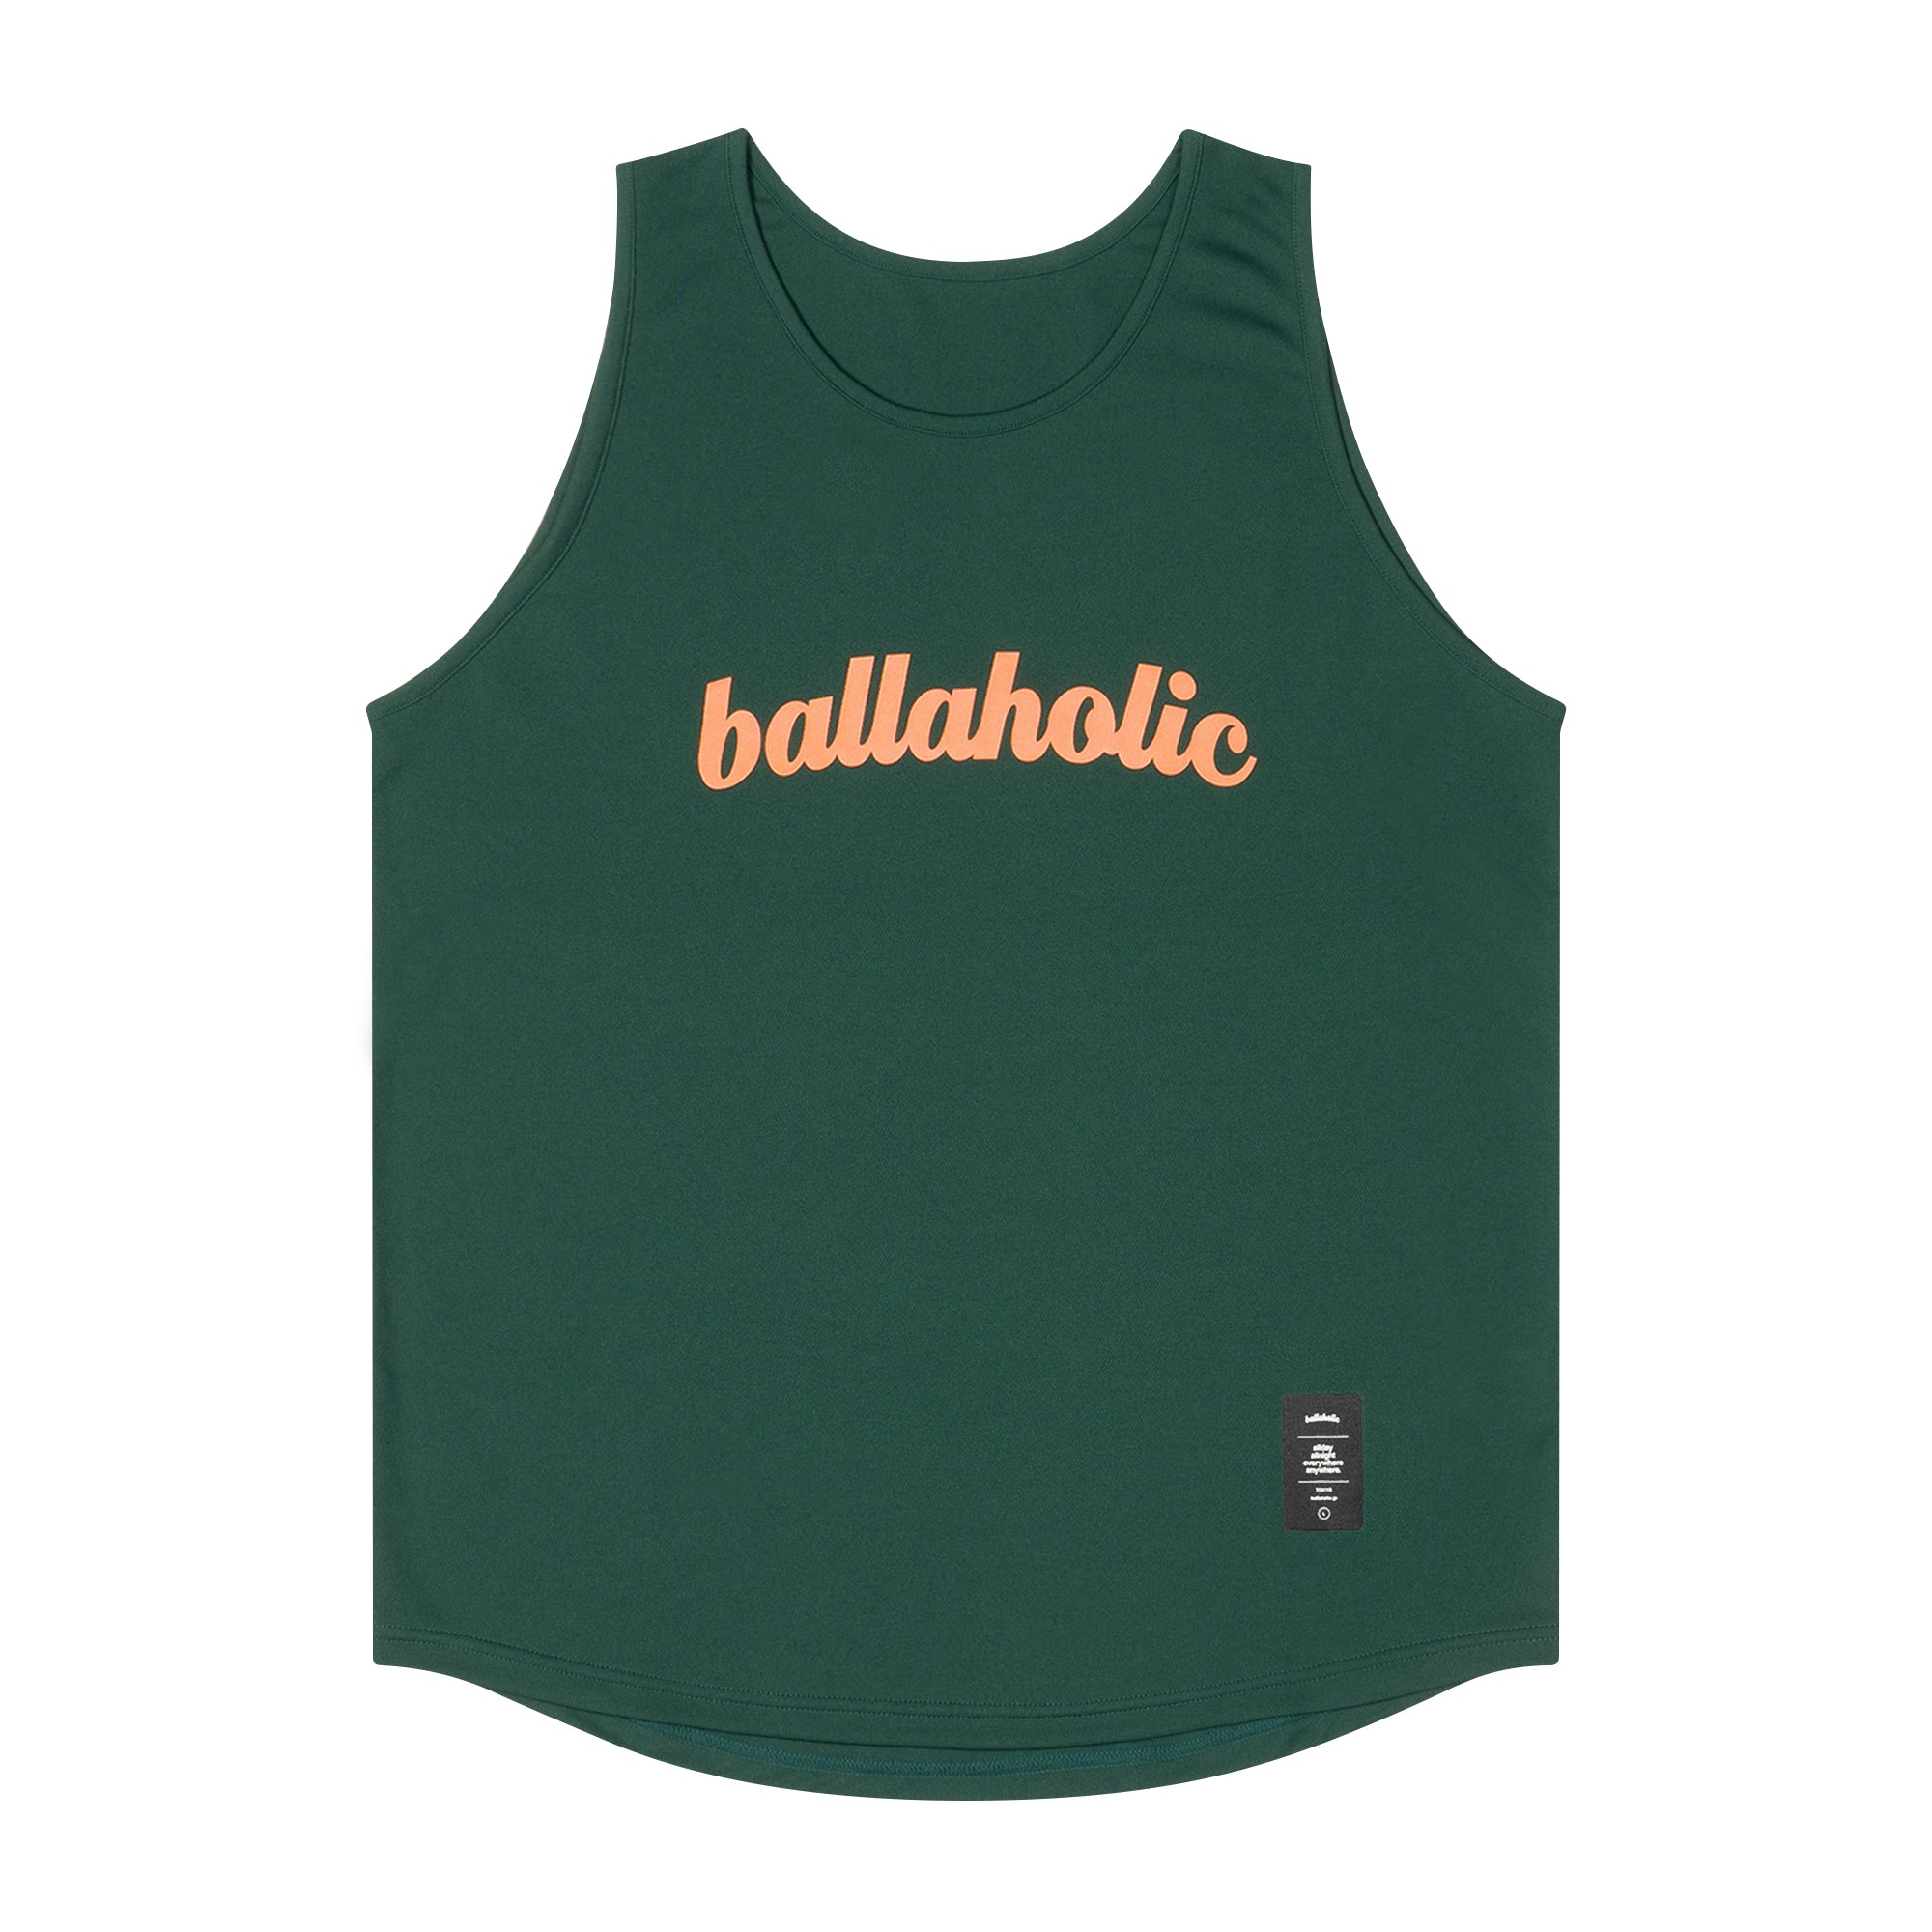 ballaholic Logo Tank Top XXL - バスケットボール